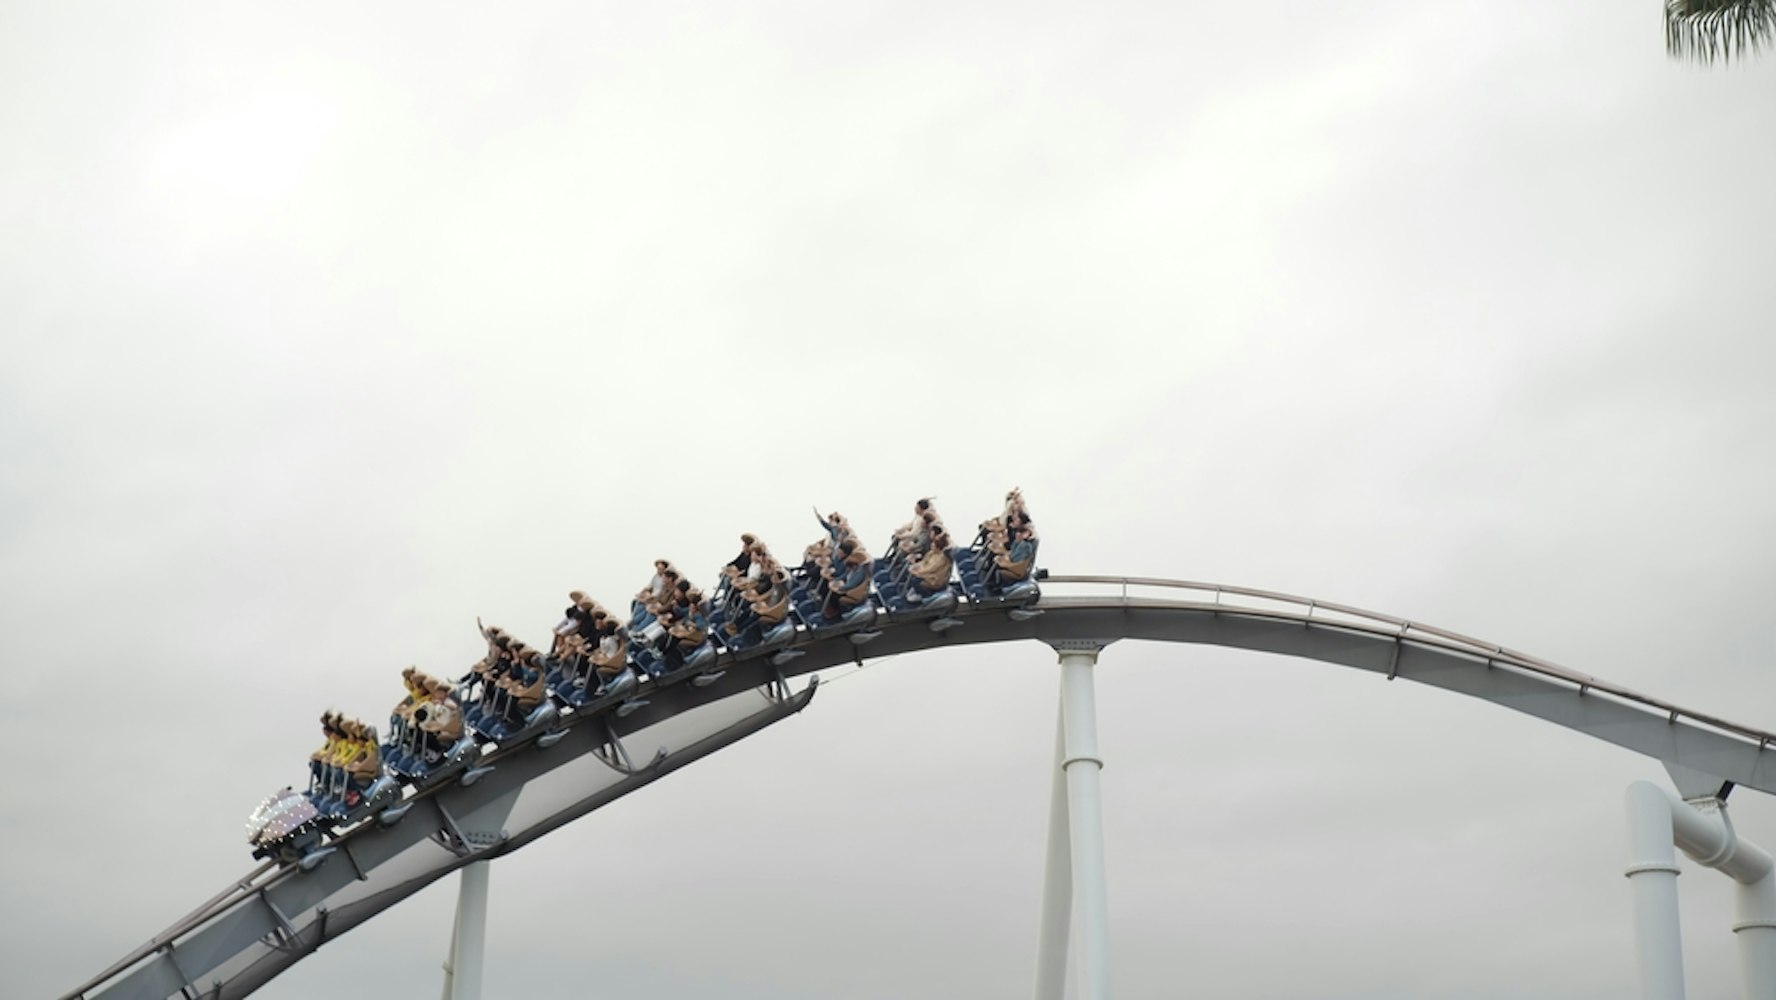 Roller coaster rides at Universal Studios Japan